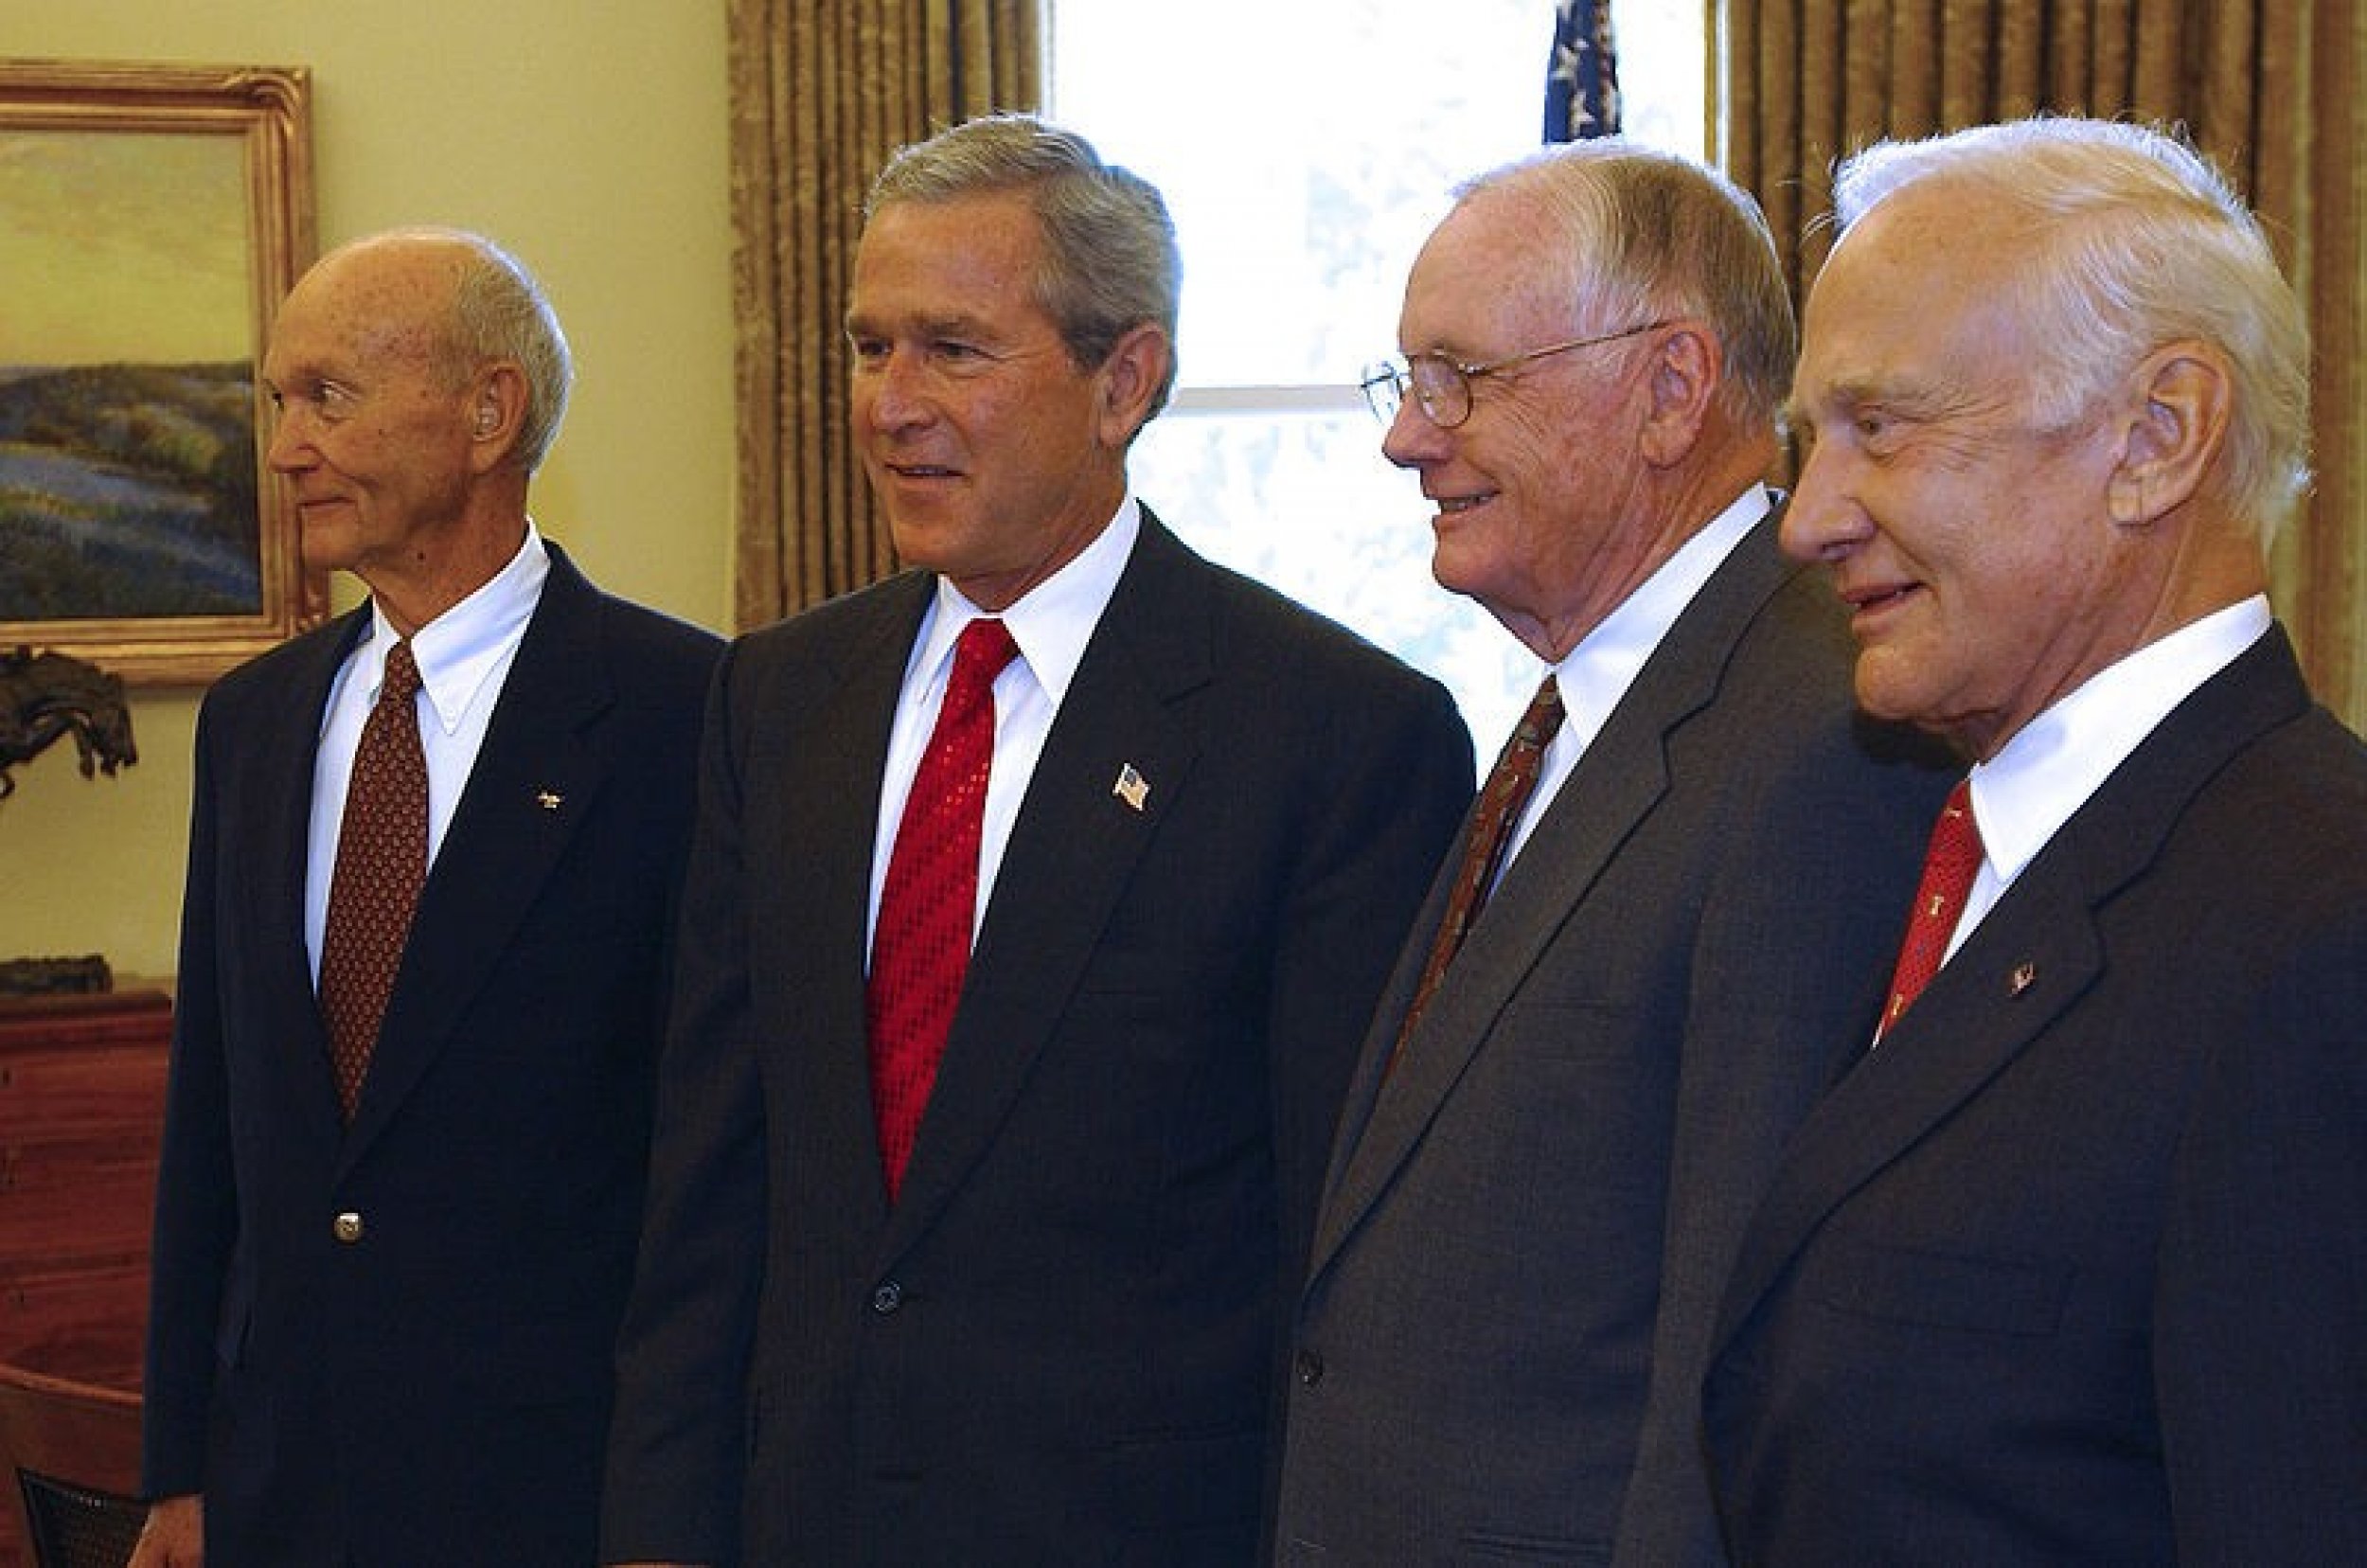 Apollo 11 and President Bush